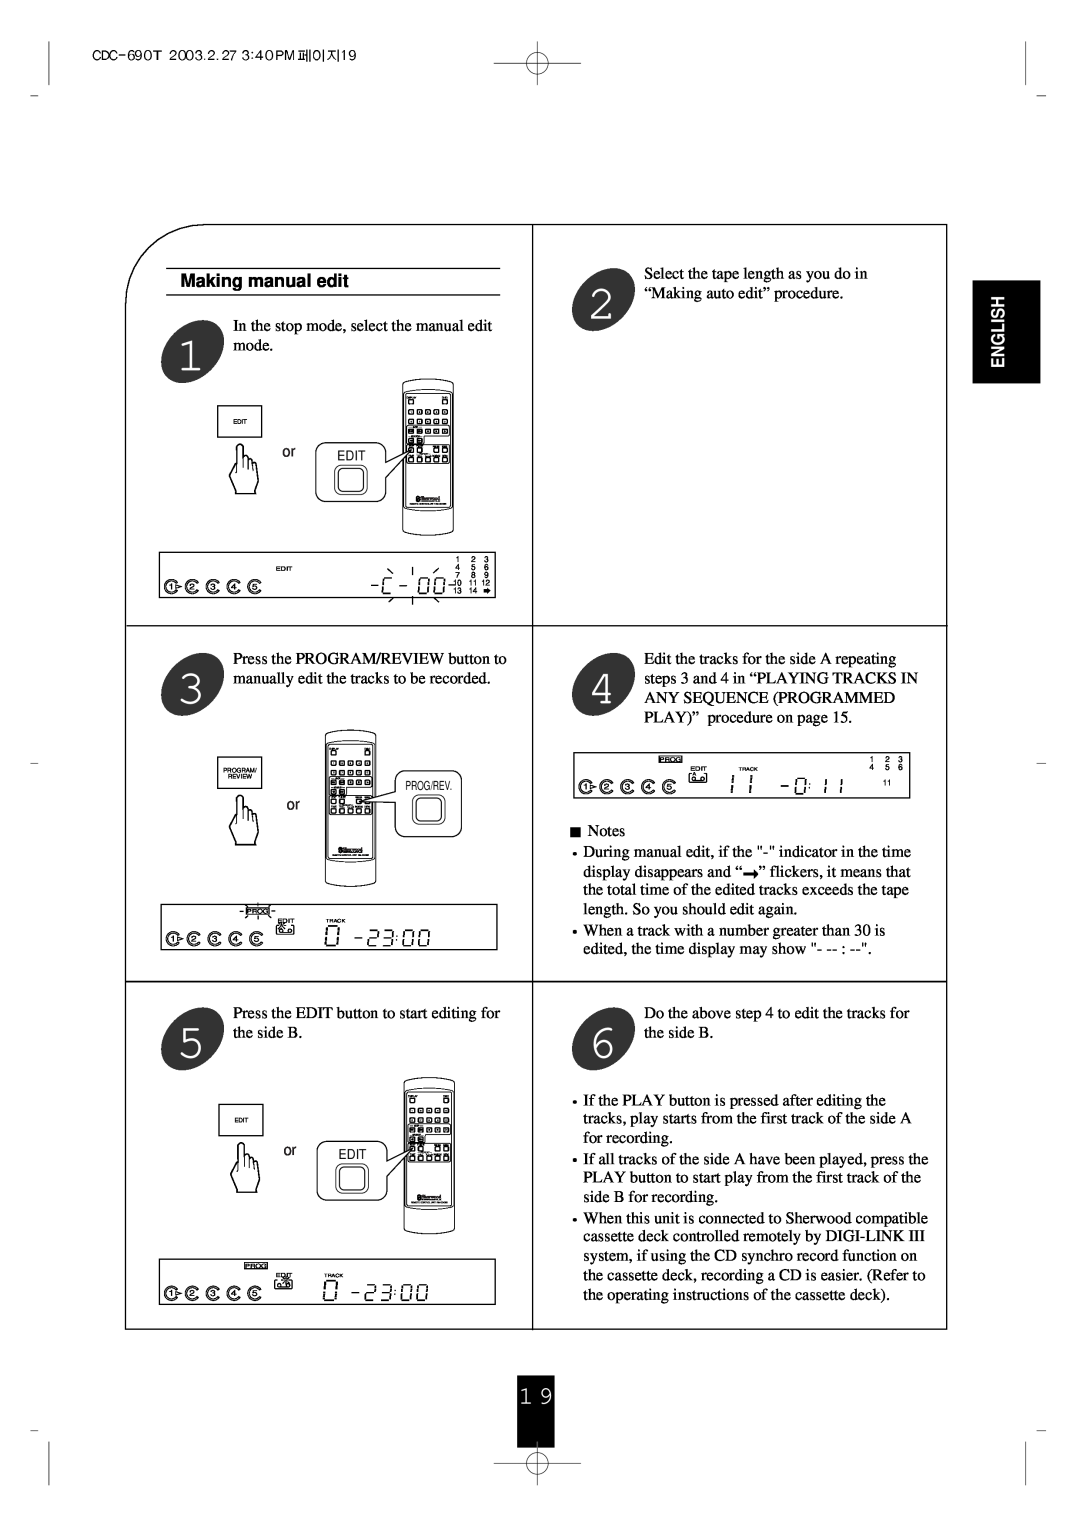 Sherwood CDC-690T operating instructions Making manual edit, English 